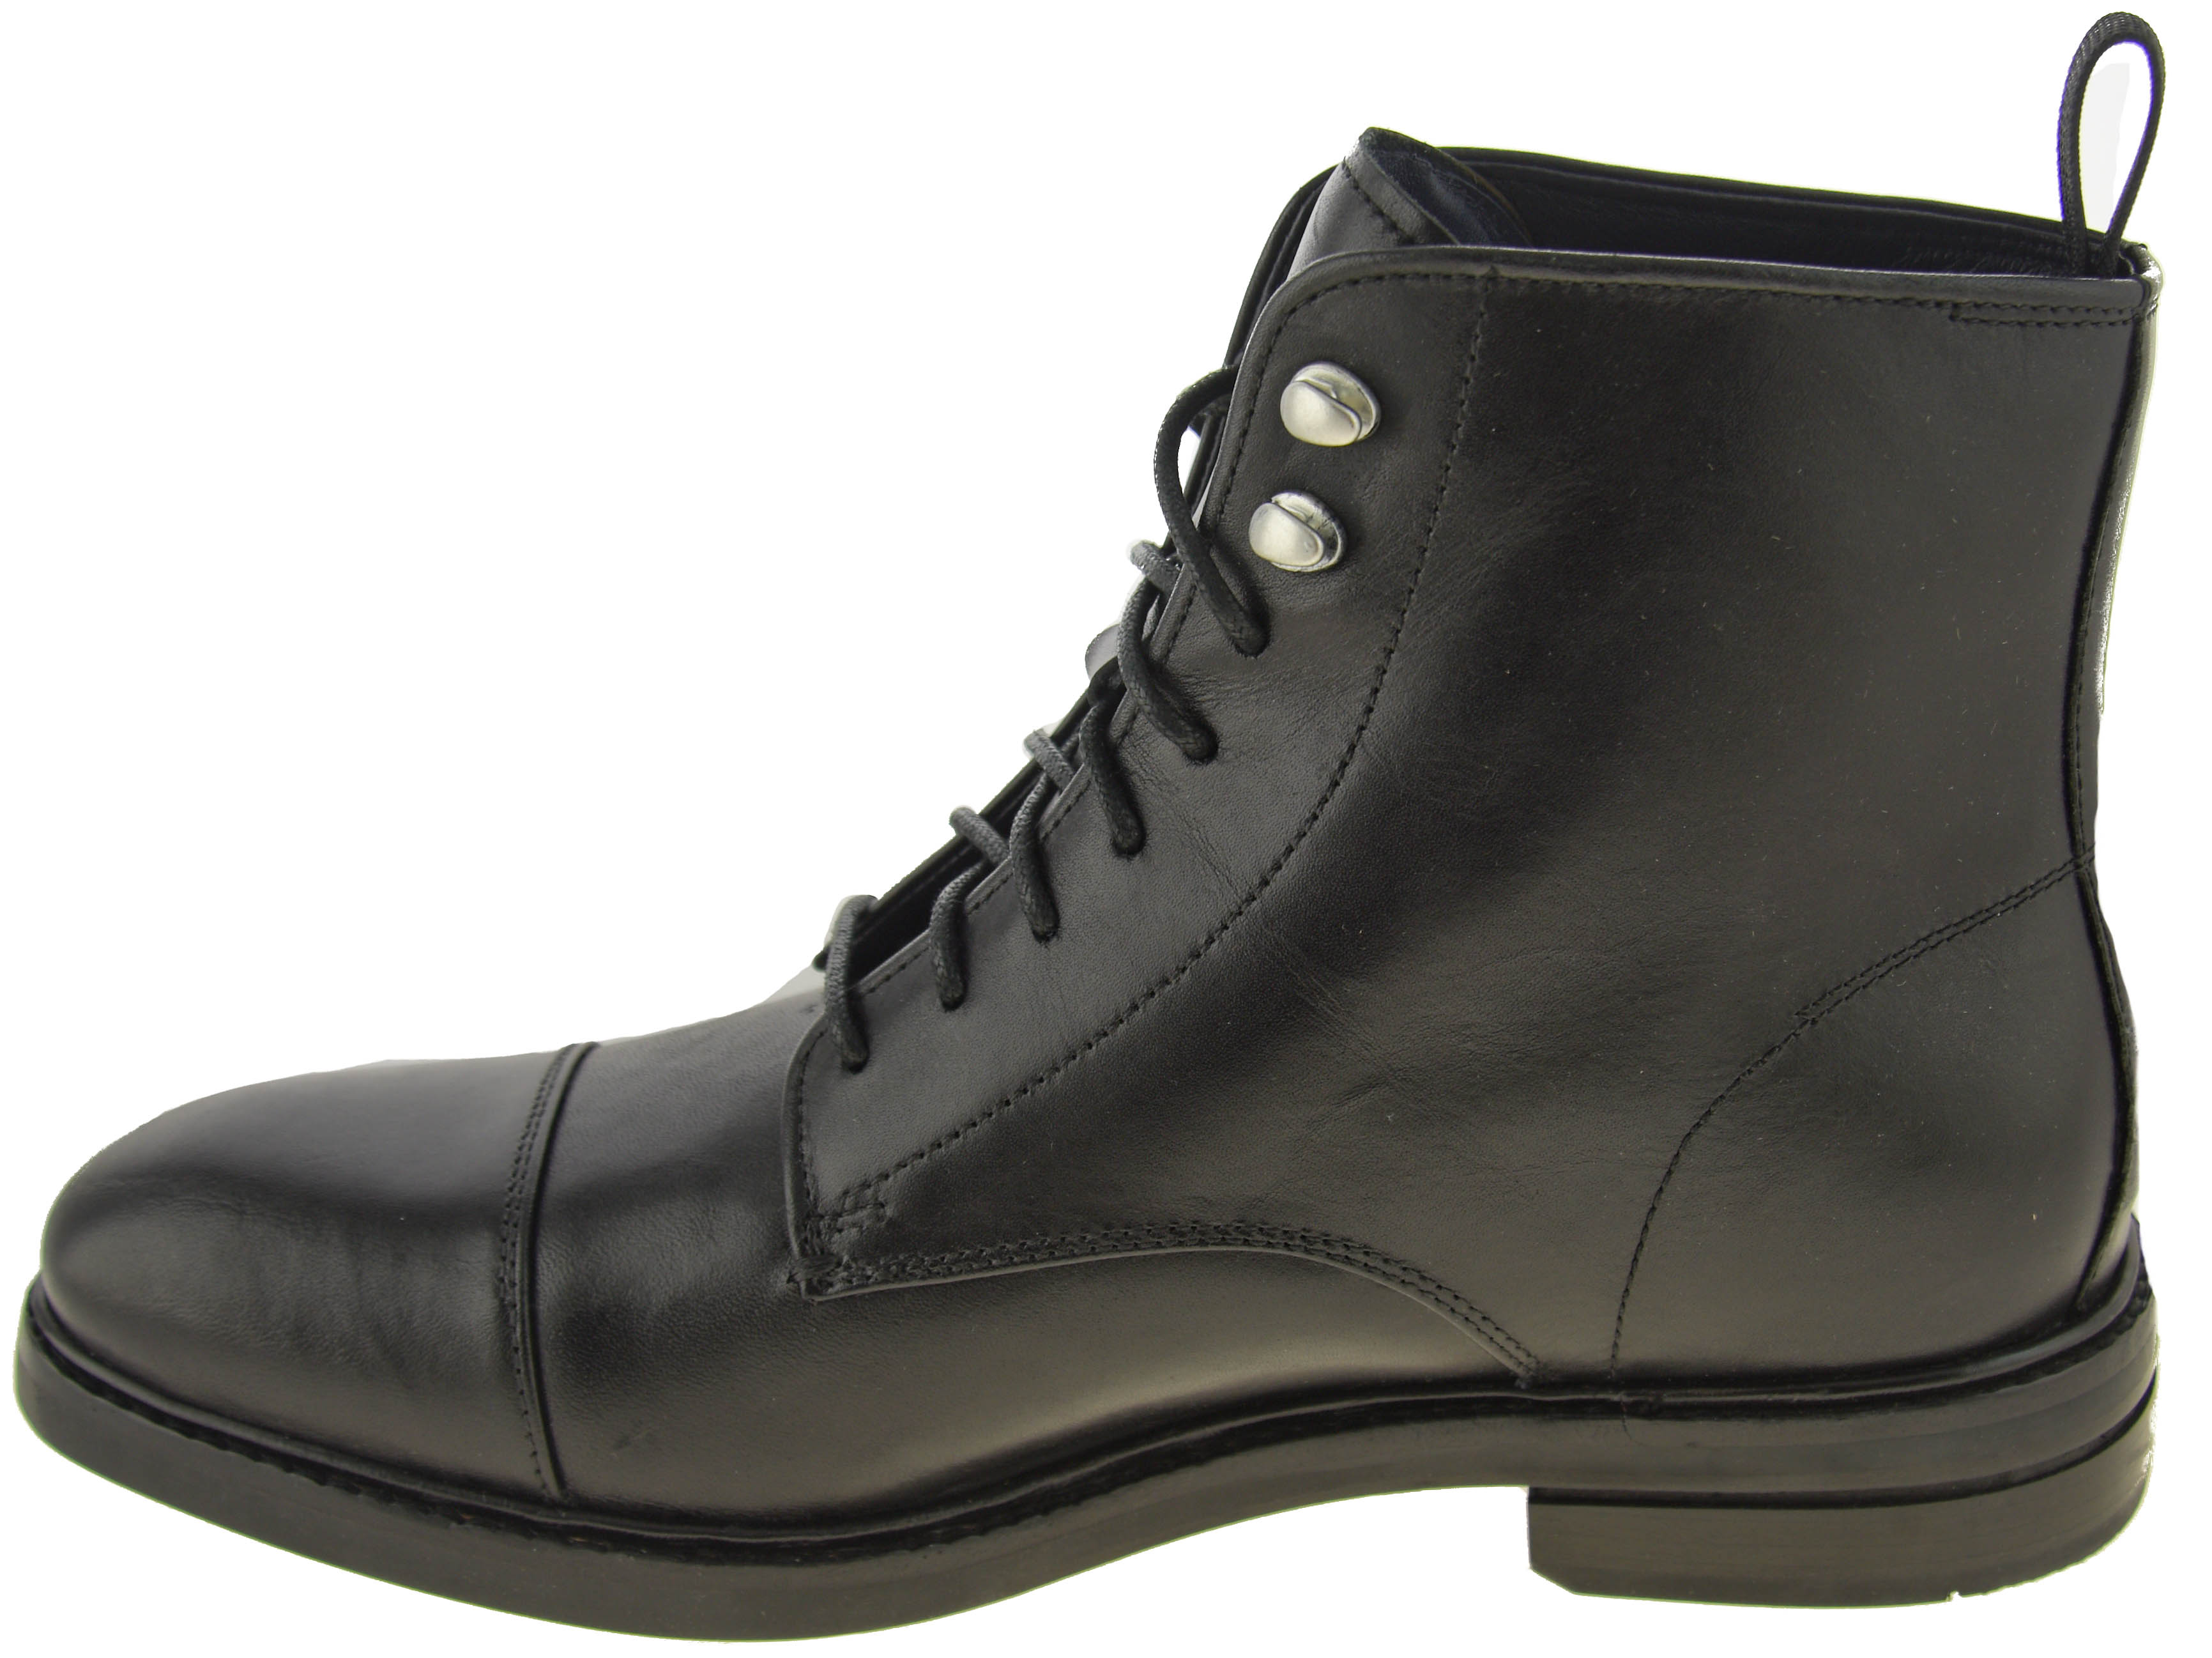 Cole Haan Men's Wagner Grand Cap Toe Boot Black Style C28634 | eBay